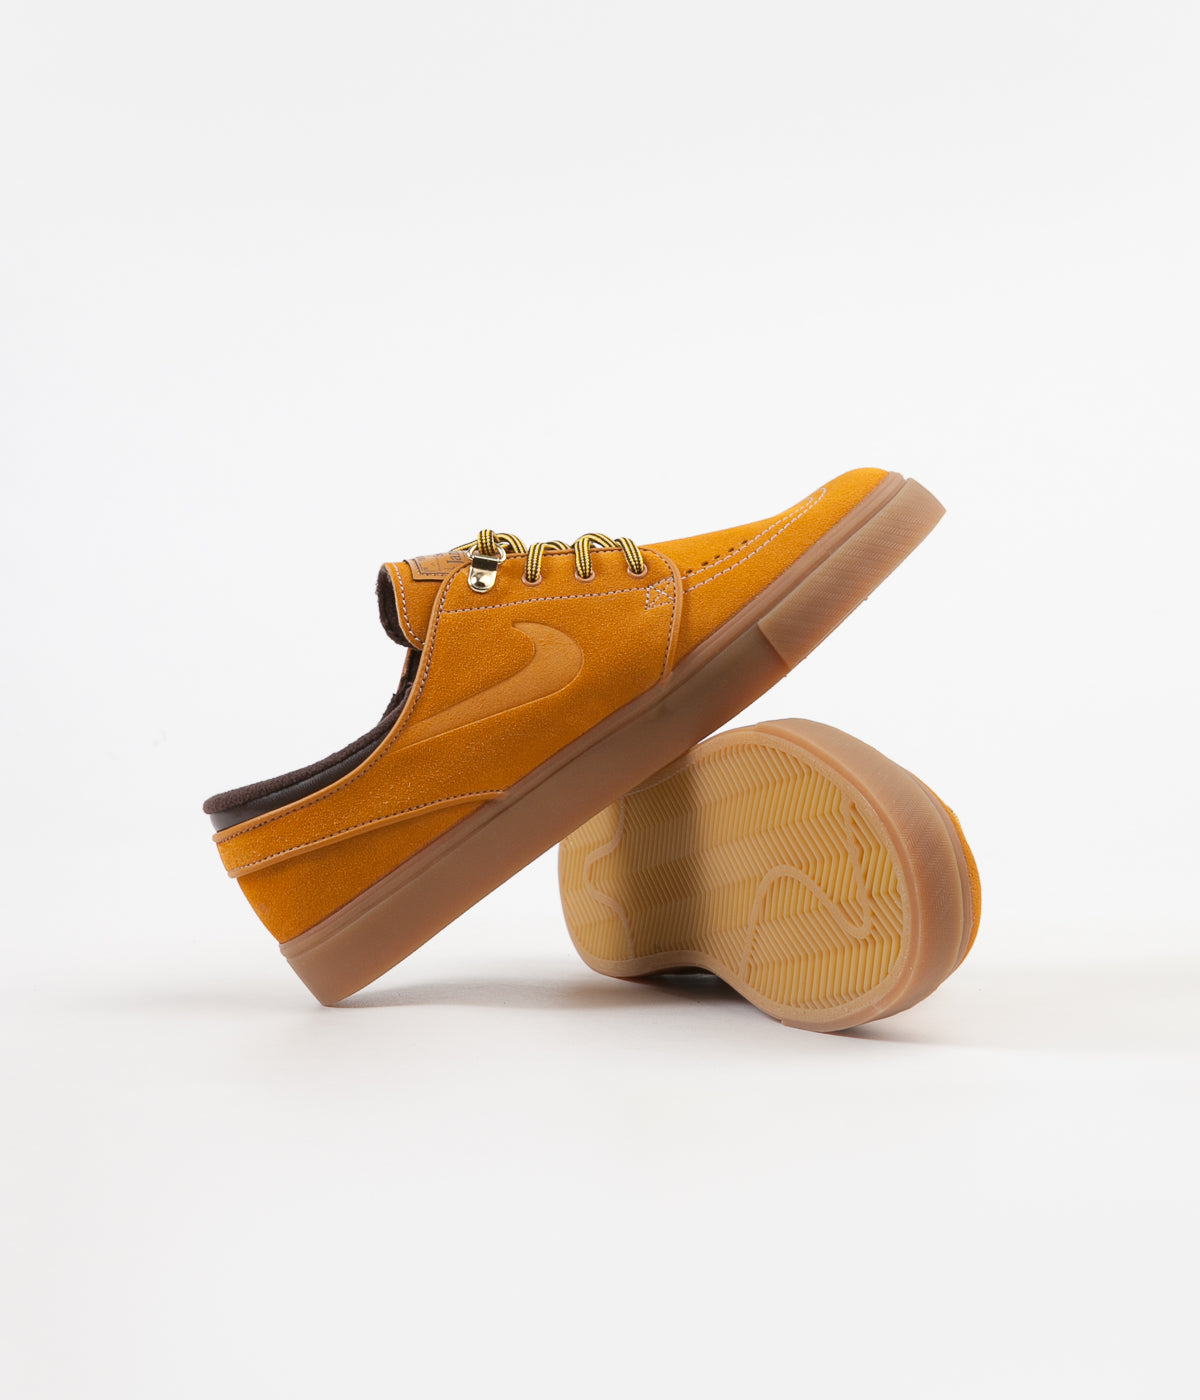 nike sb janoski premium bronze & gum suede skate shoes